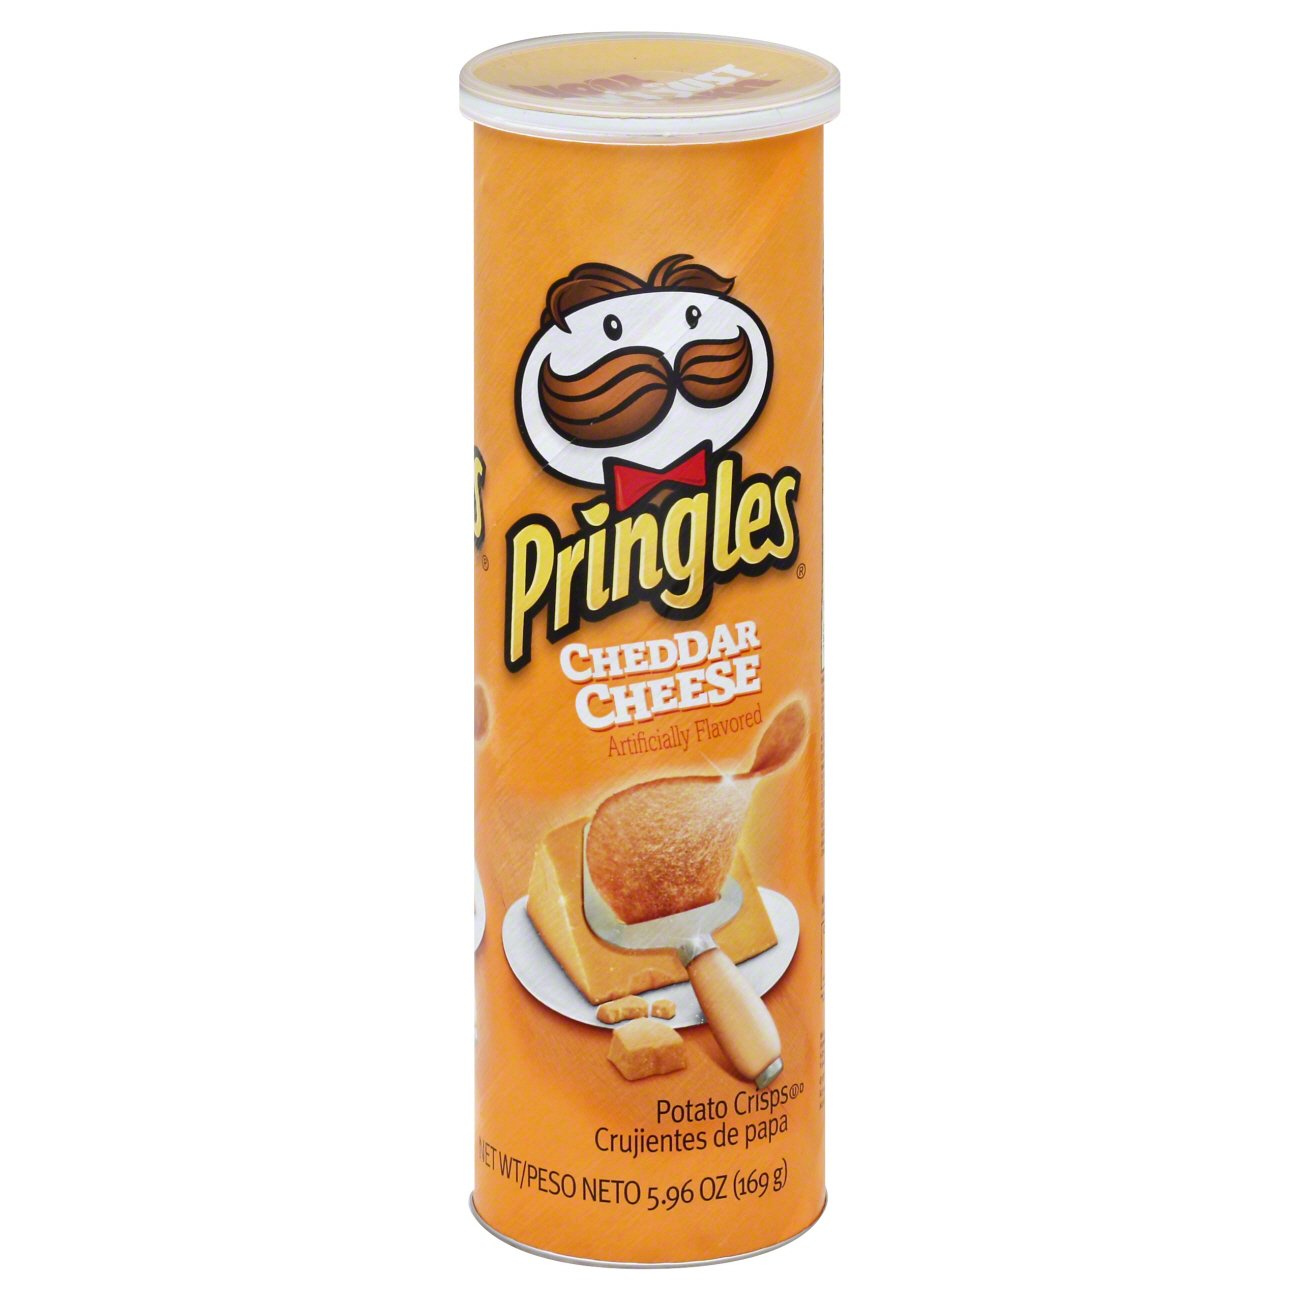 Pringles Cheddar Cheese Potato Crisps - Shop Chips at H-E-B